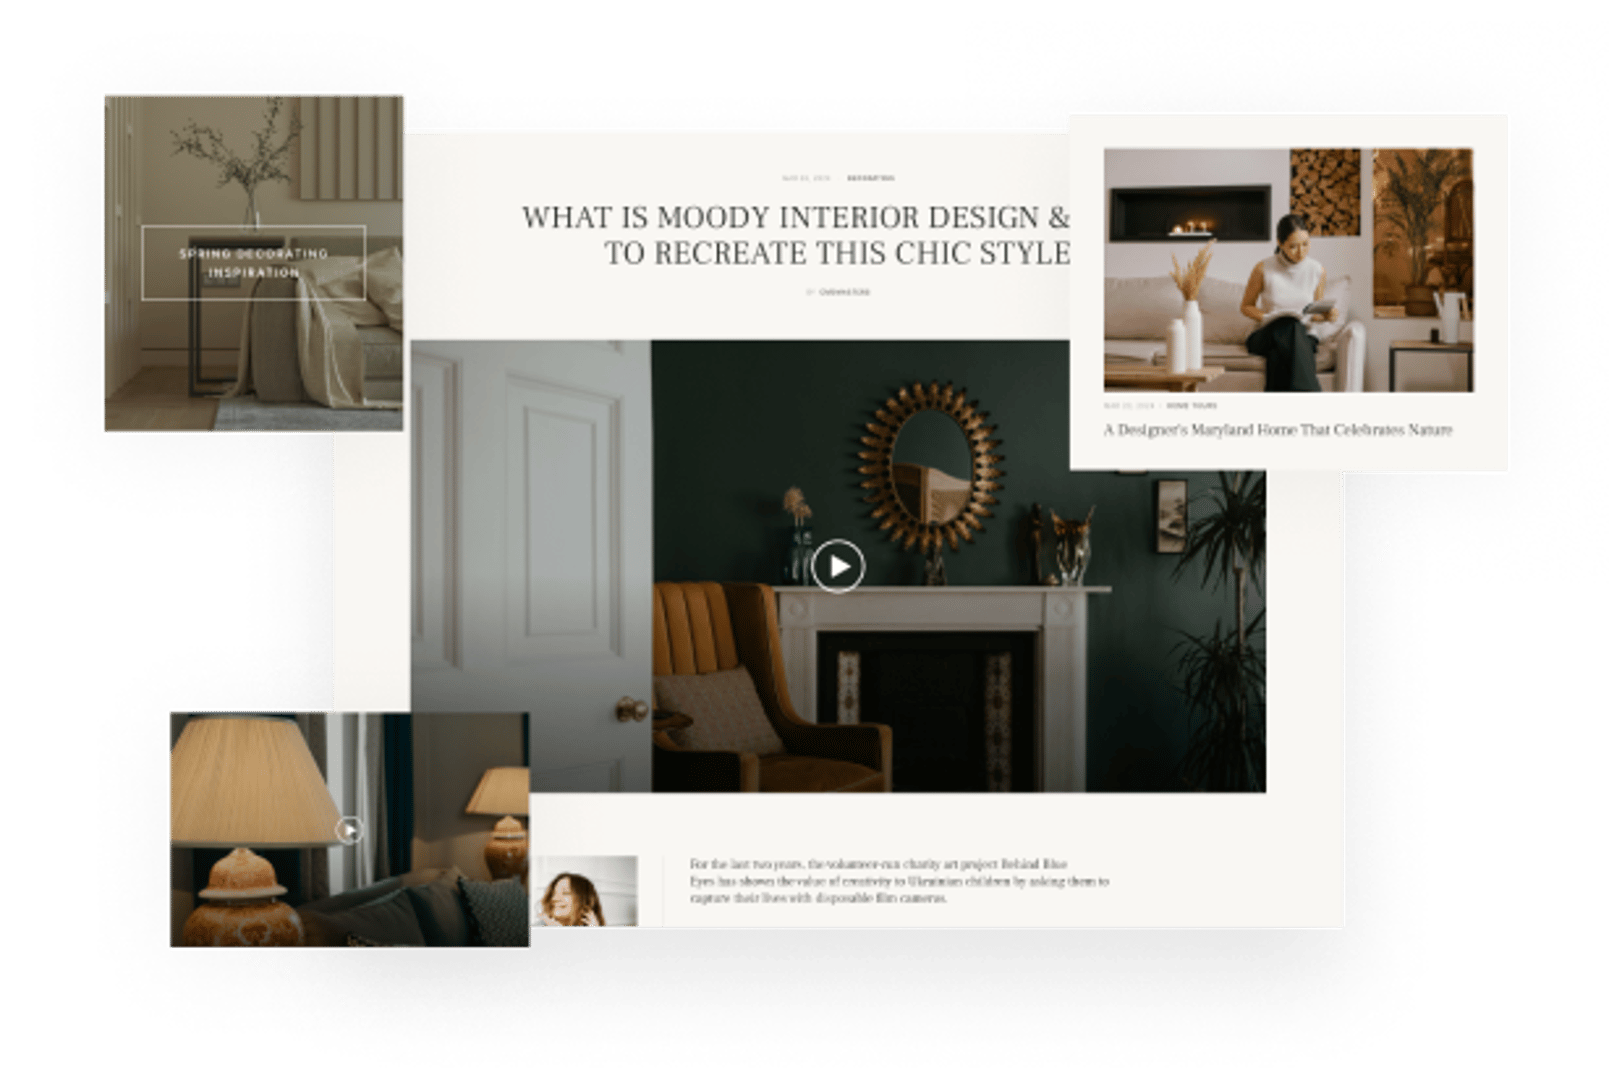 Interiocity - Home Decor Blog and Interior Design Magazine WordPress Theme - Video Post Layout | CMSMasters studio